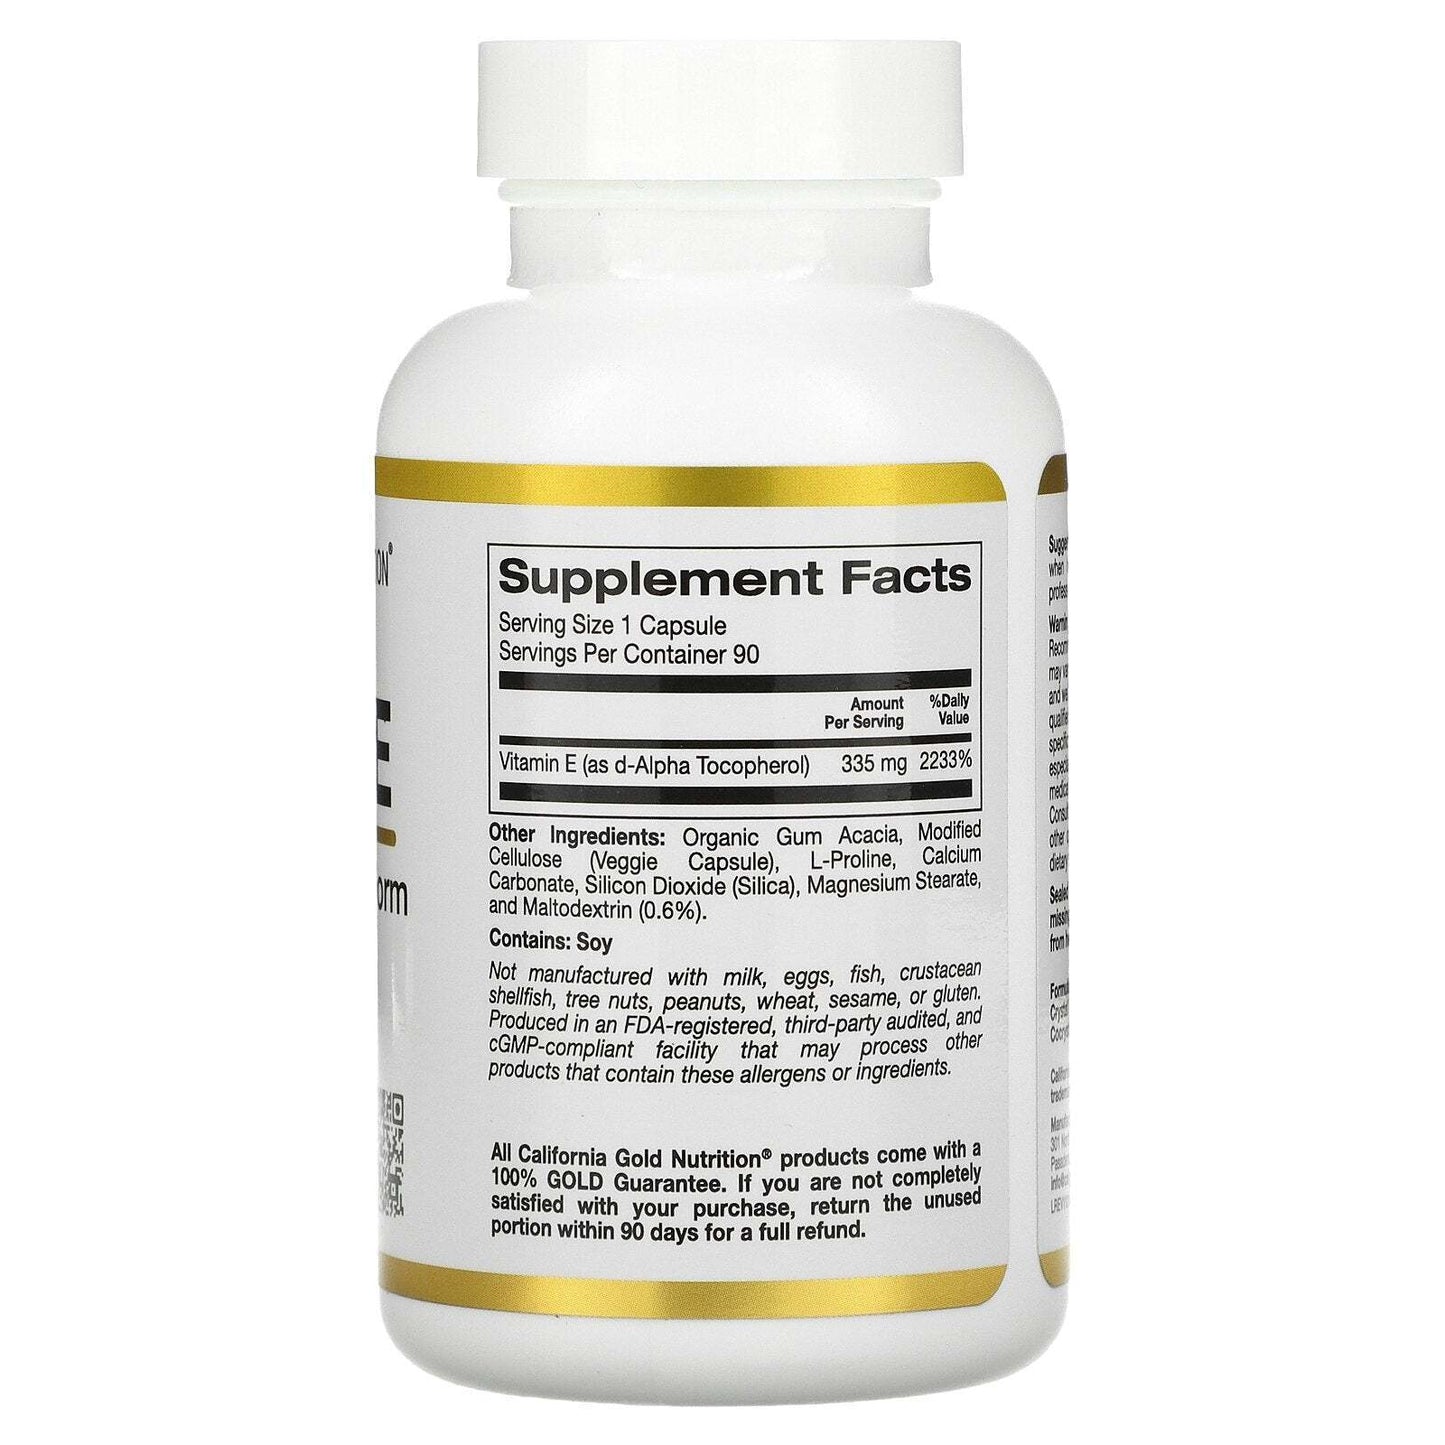 California Gold Nutrition Bioactive Vitamin E Antioxidant 335mg 90 Veg Caps NEW